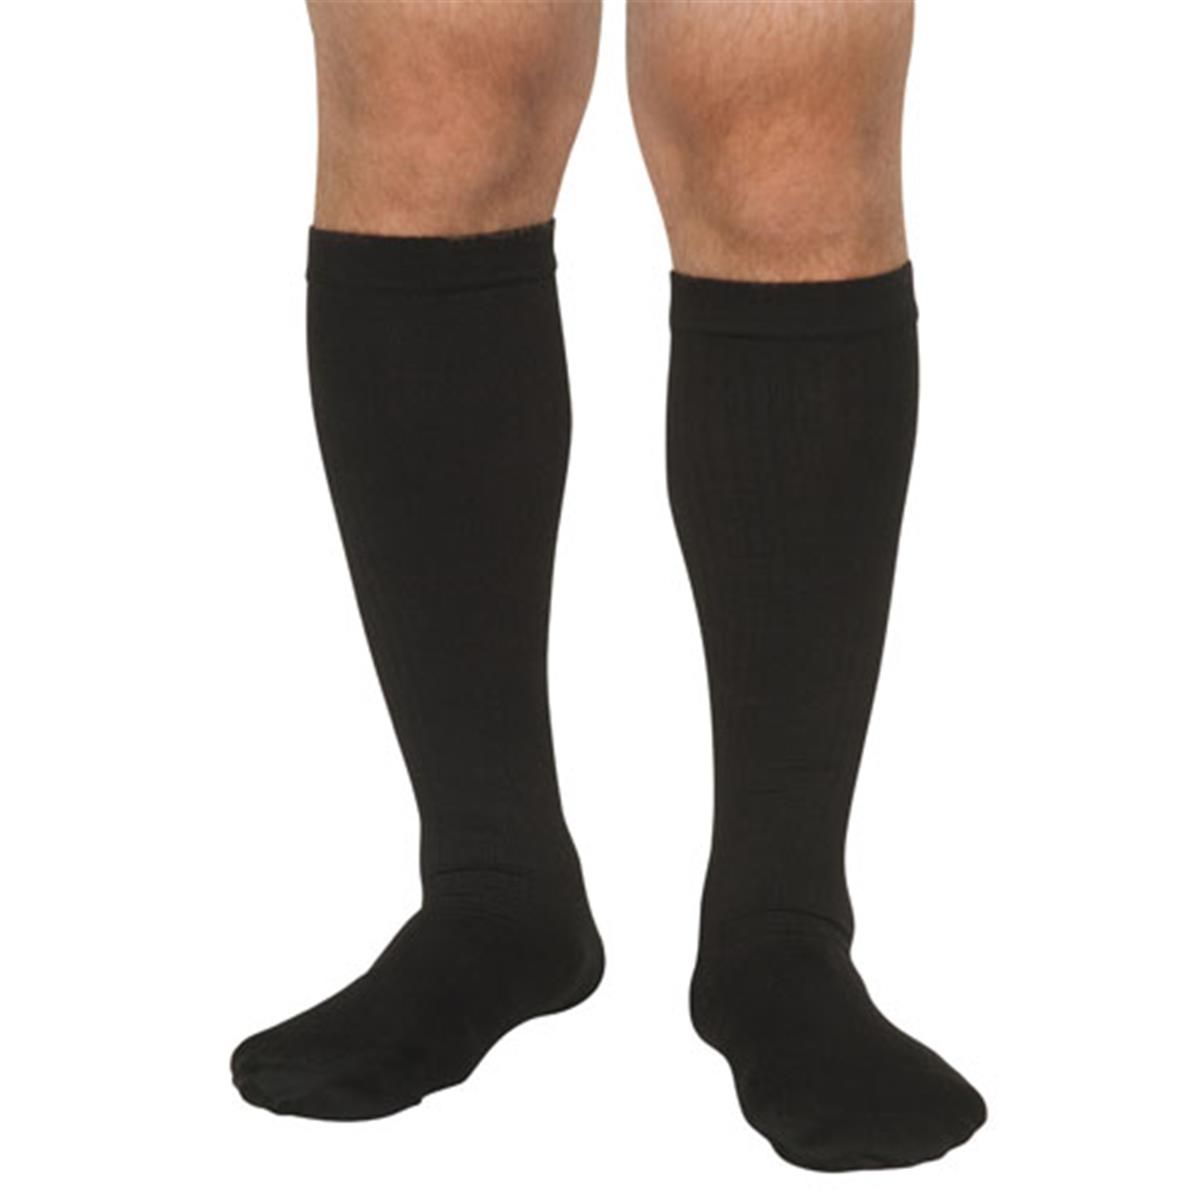 Picture of Blue Jay BJ340BLSM 10-15 mmHg Mens Mild Support Socks&#44; Black - Small & Medium